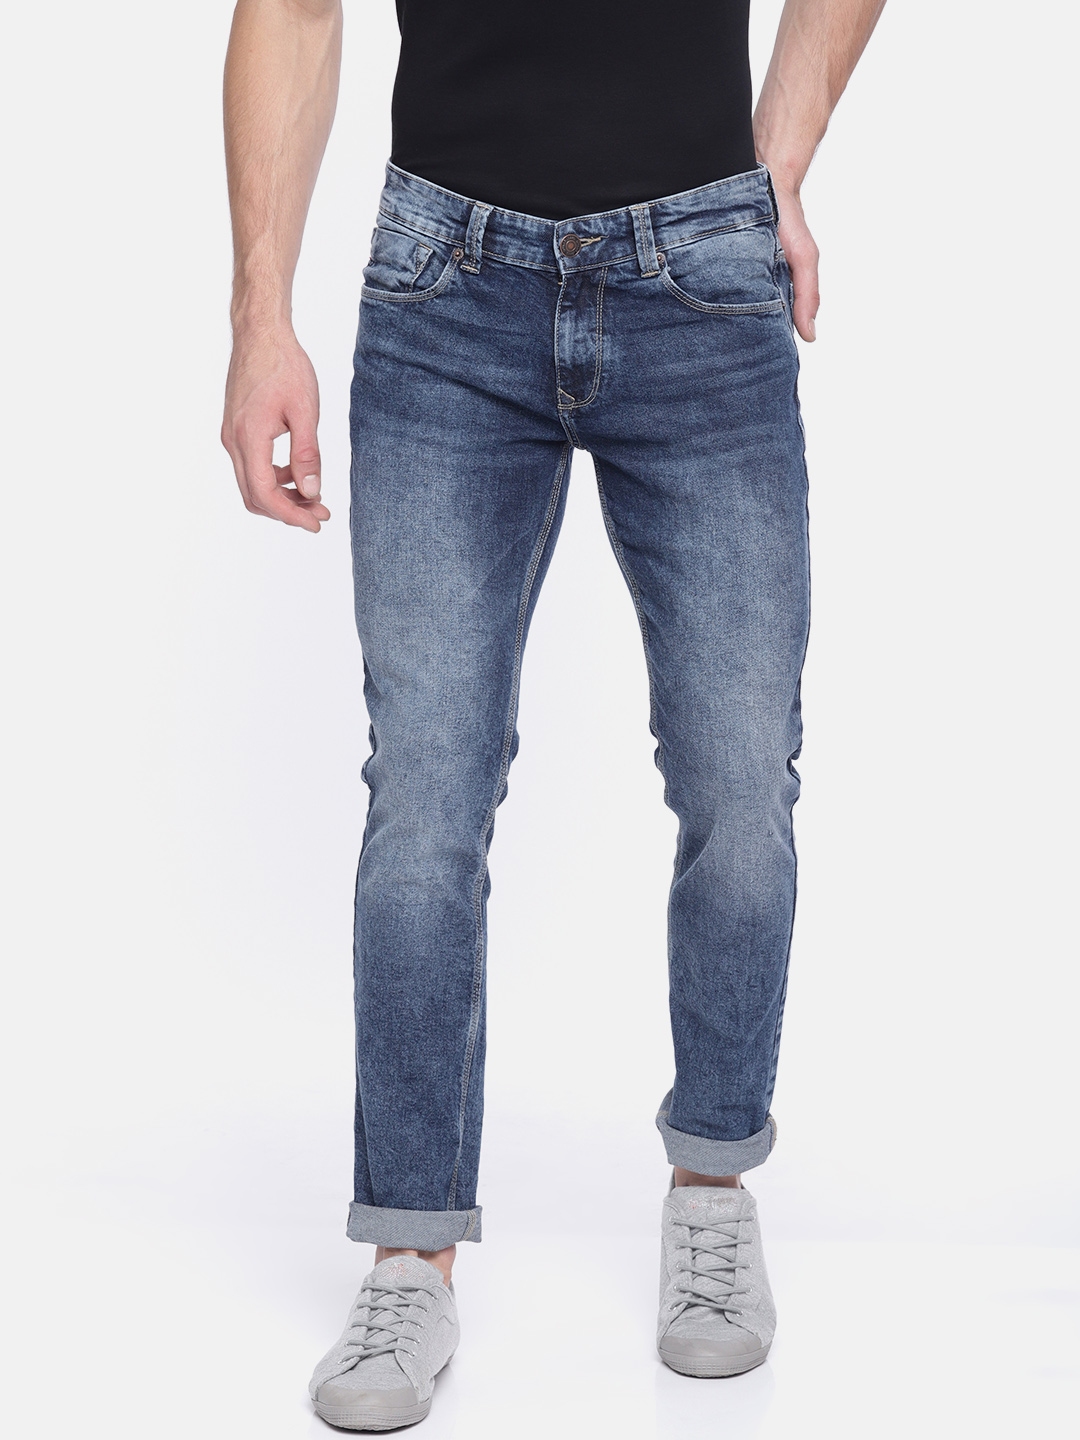 spykar stretchable jeans